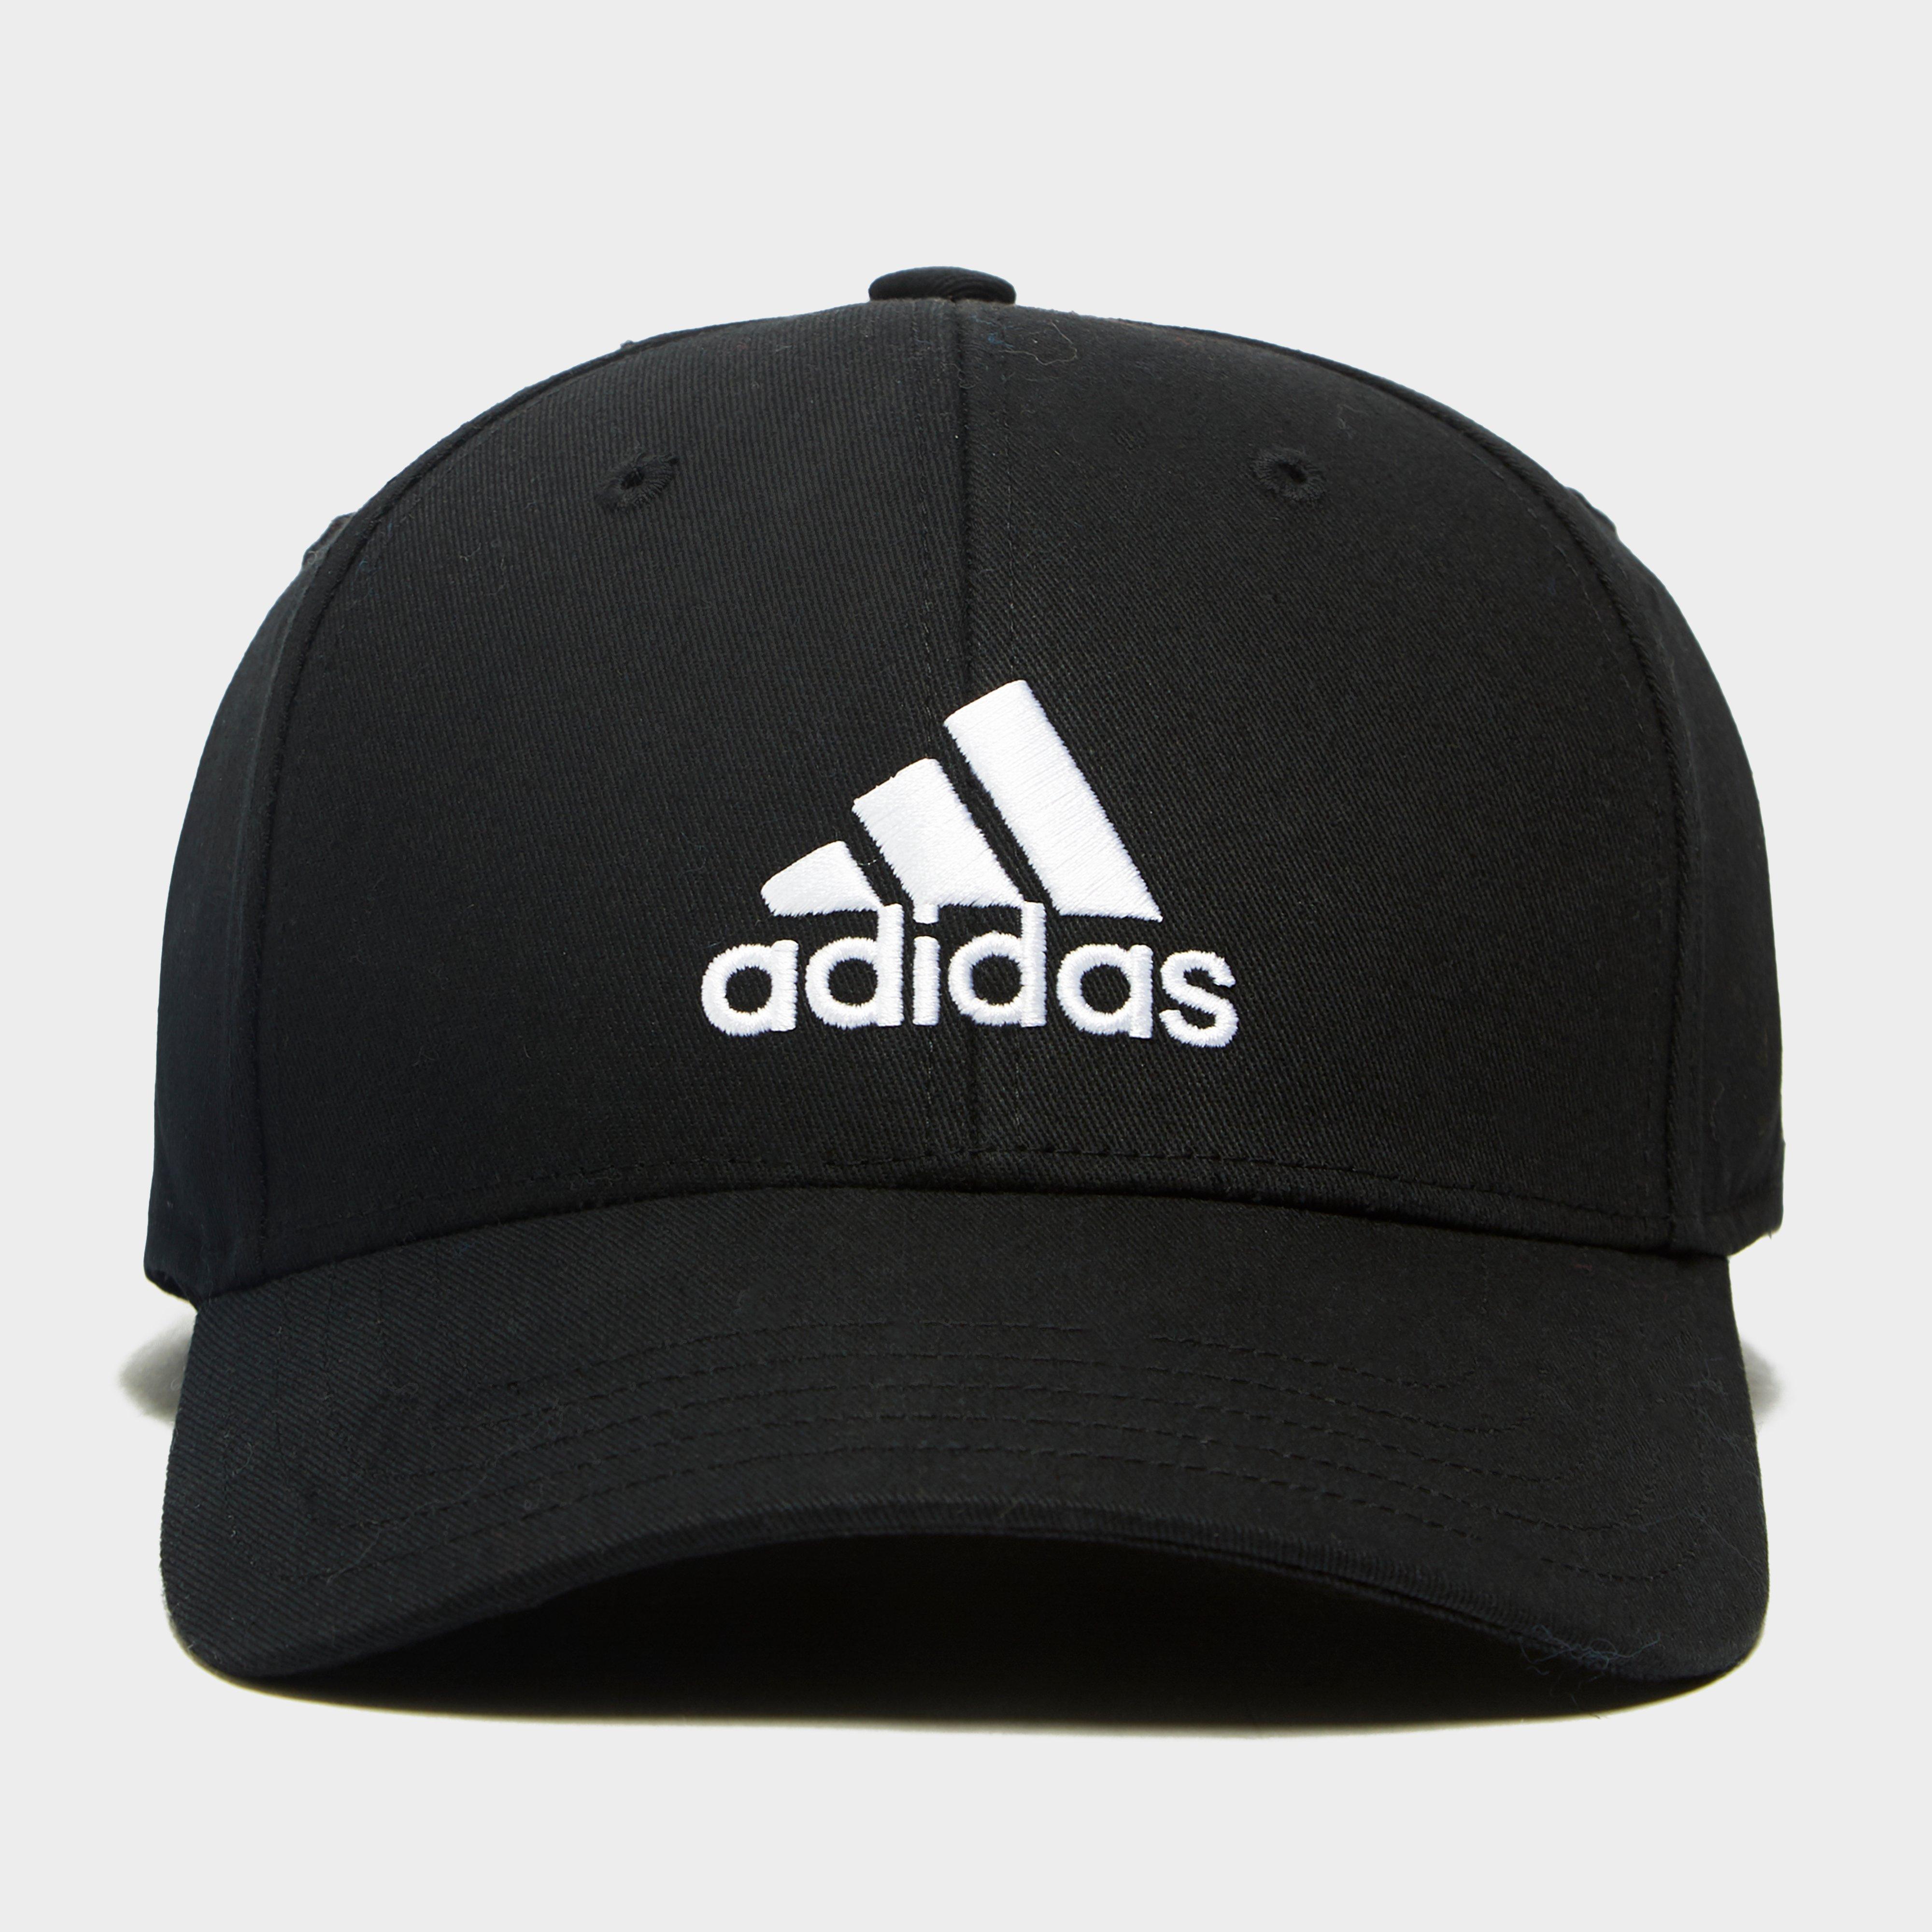 Adidas Mens Baseball Cap - Black/blk/wh  Black/blk/wh